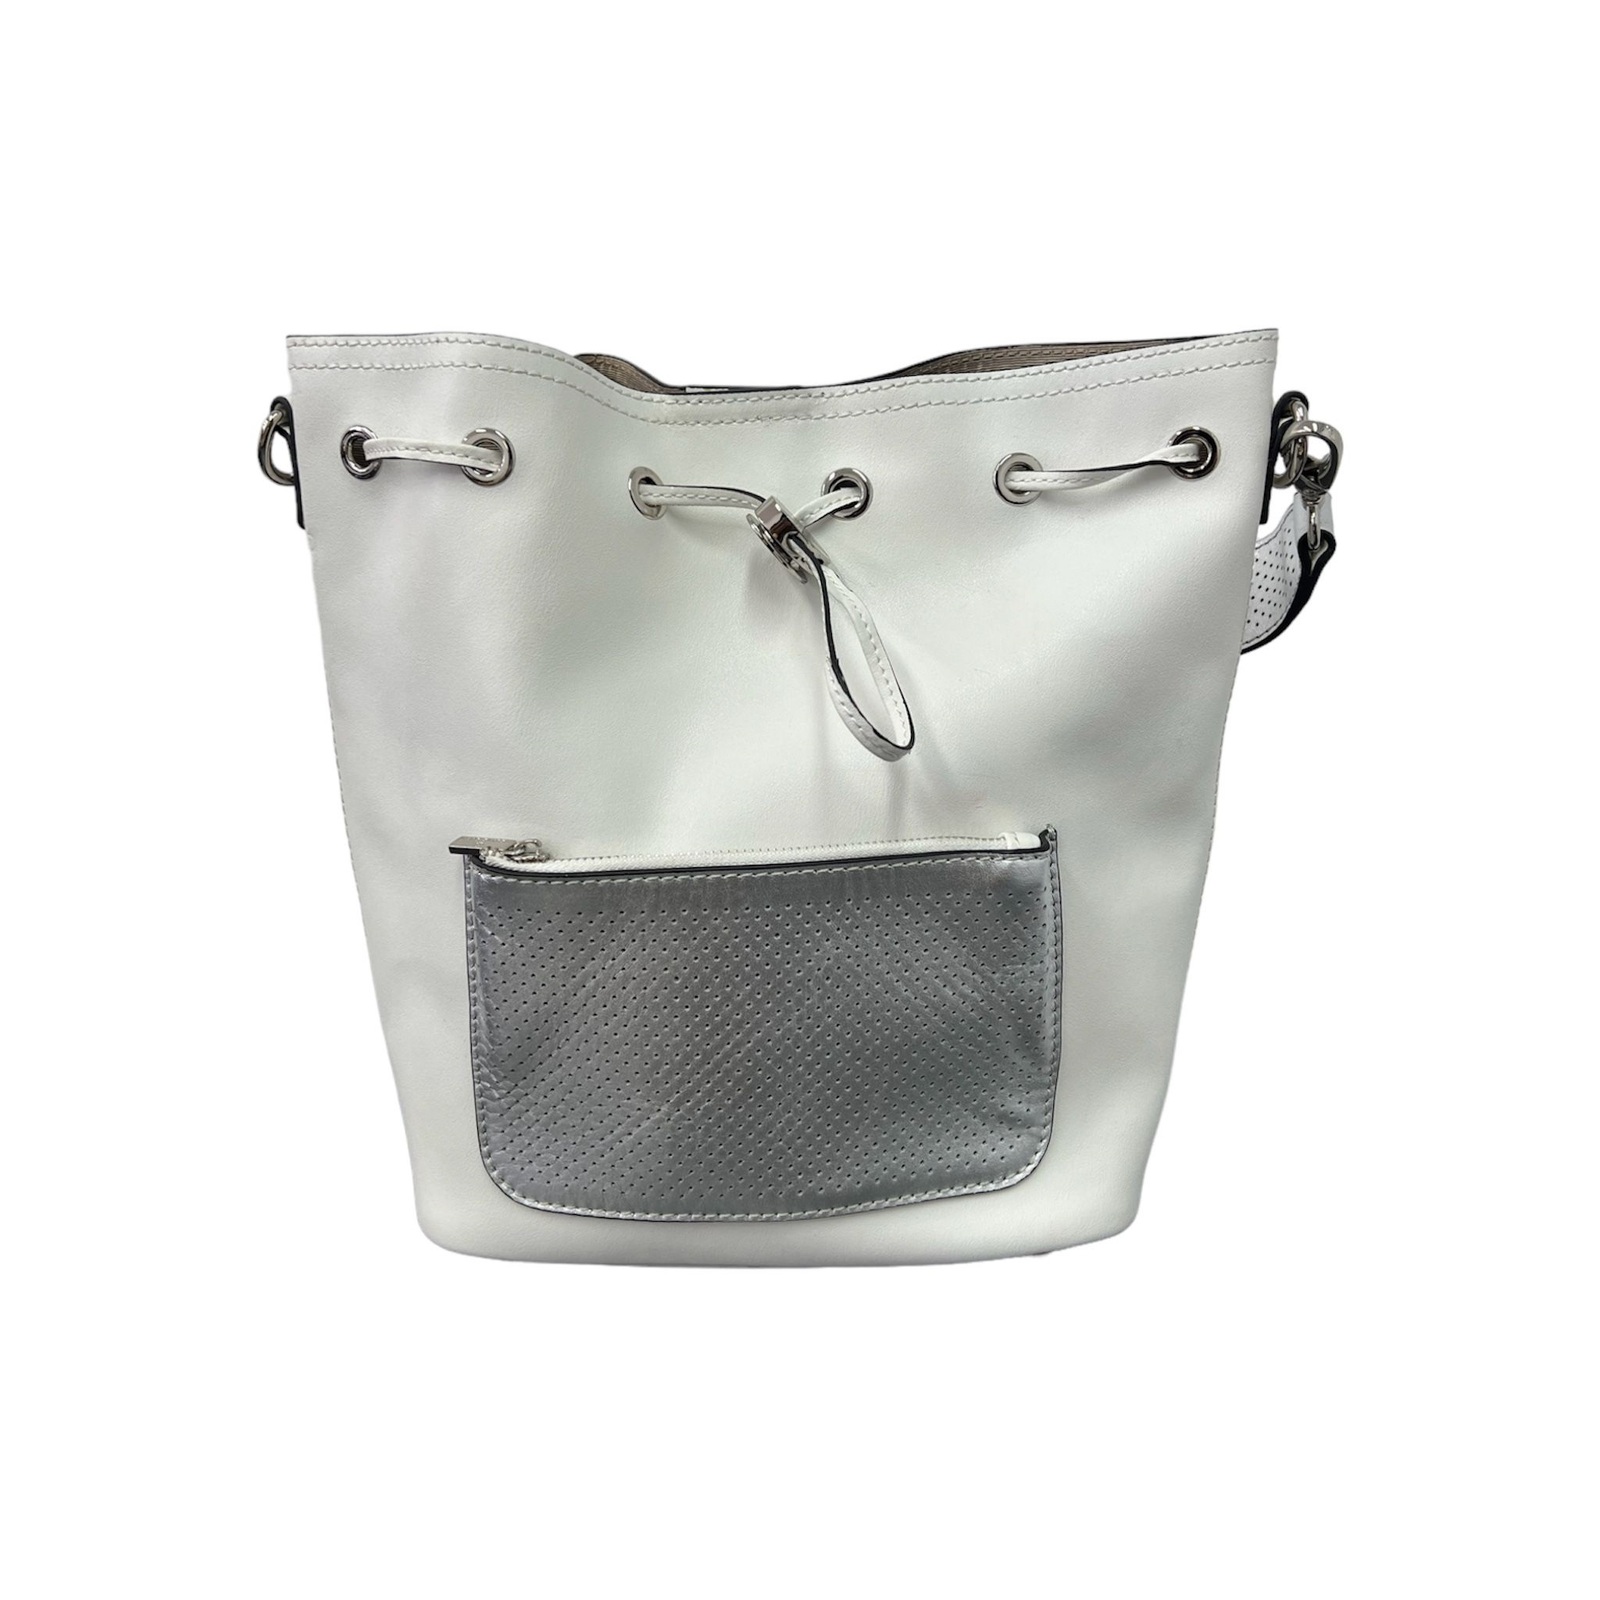 Celine Dion White Silver Handbag